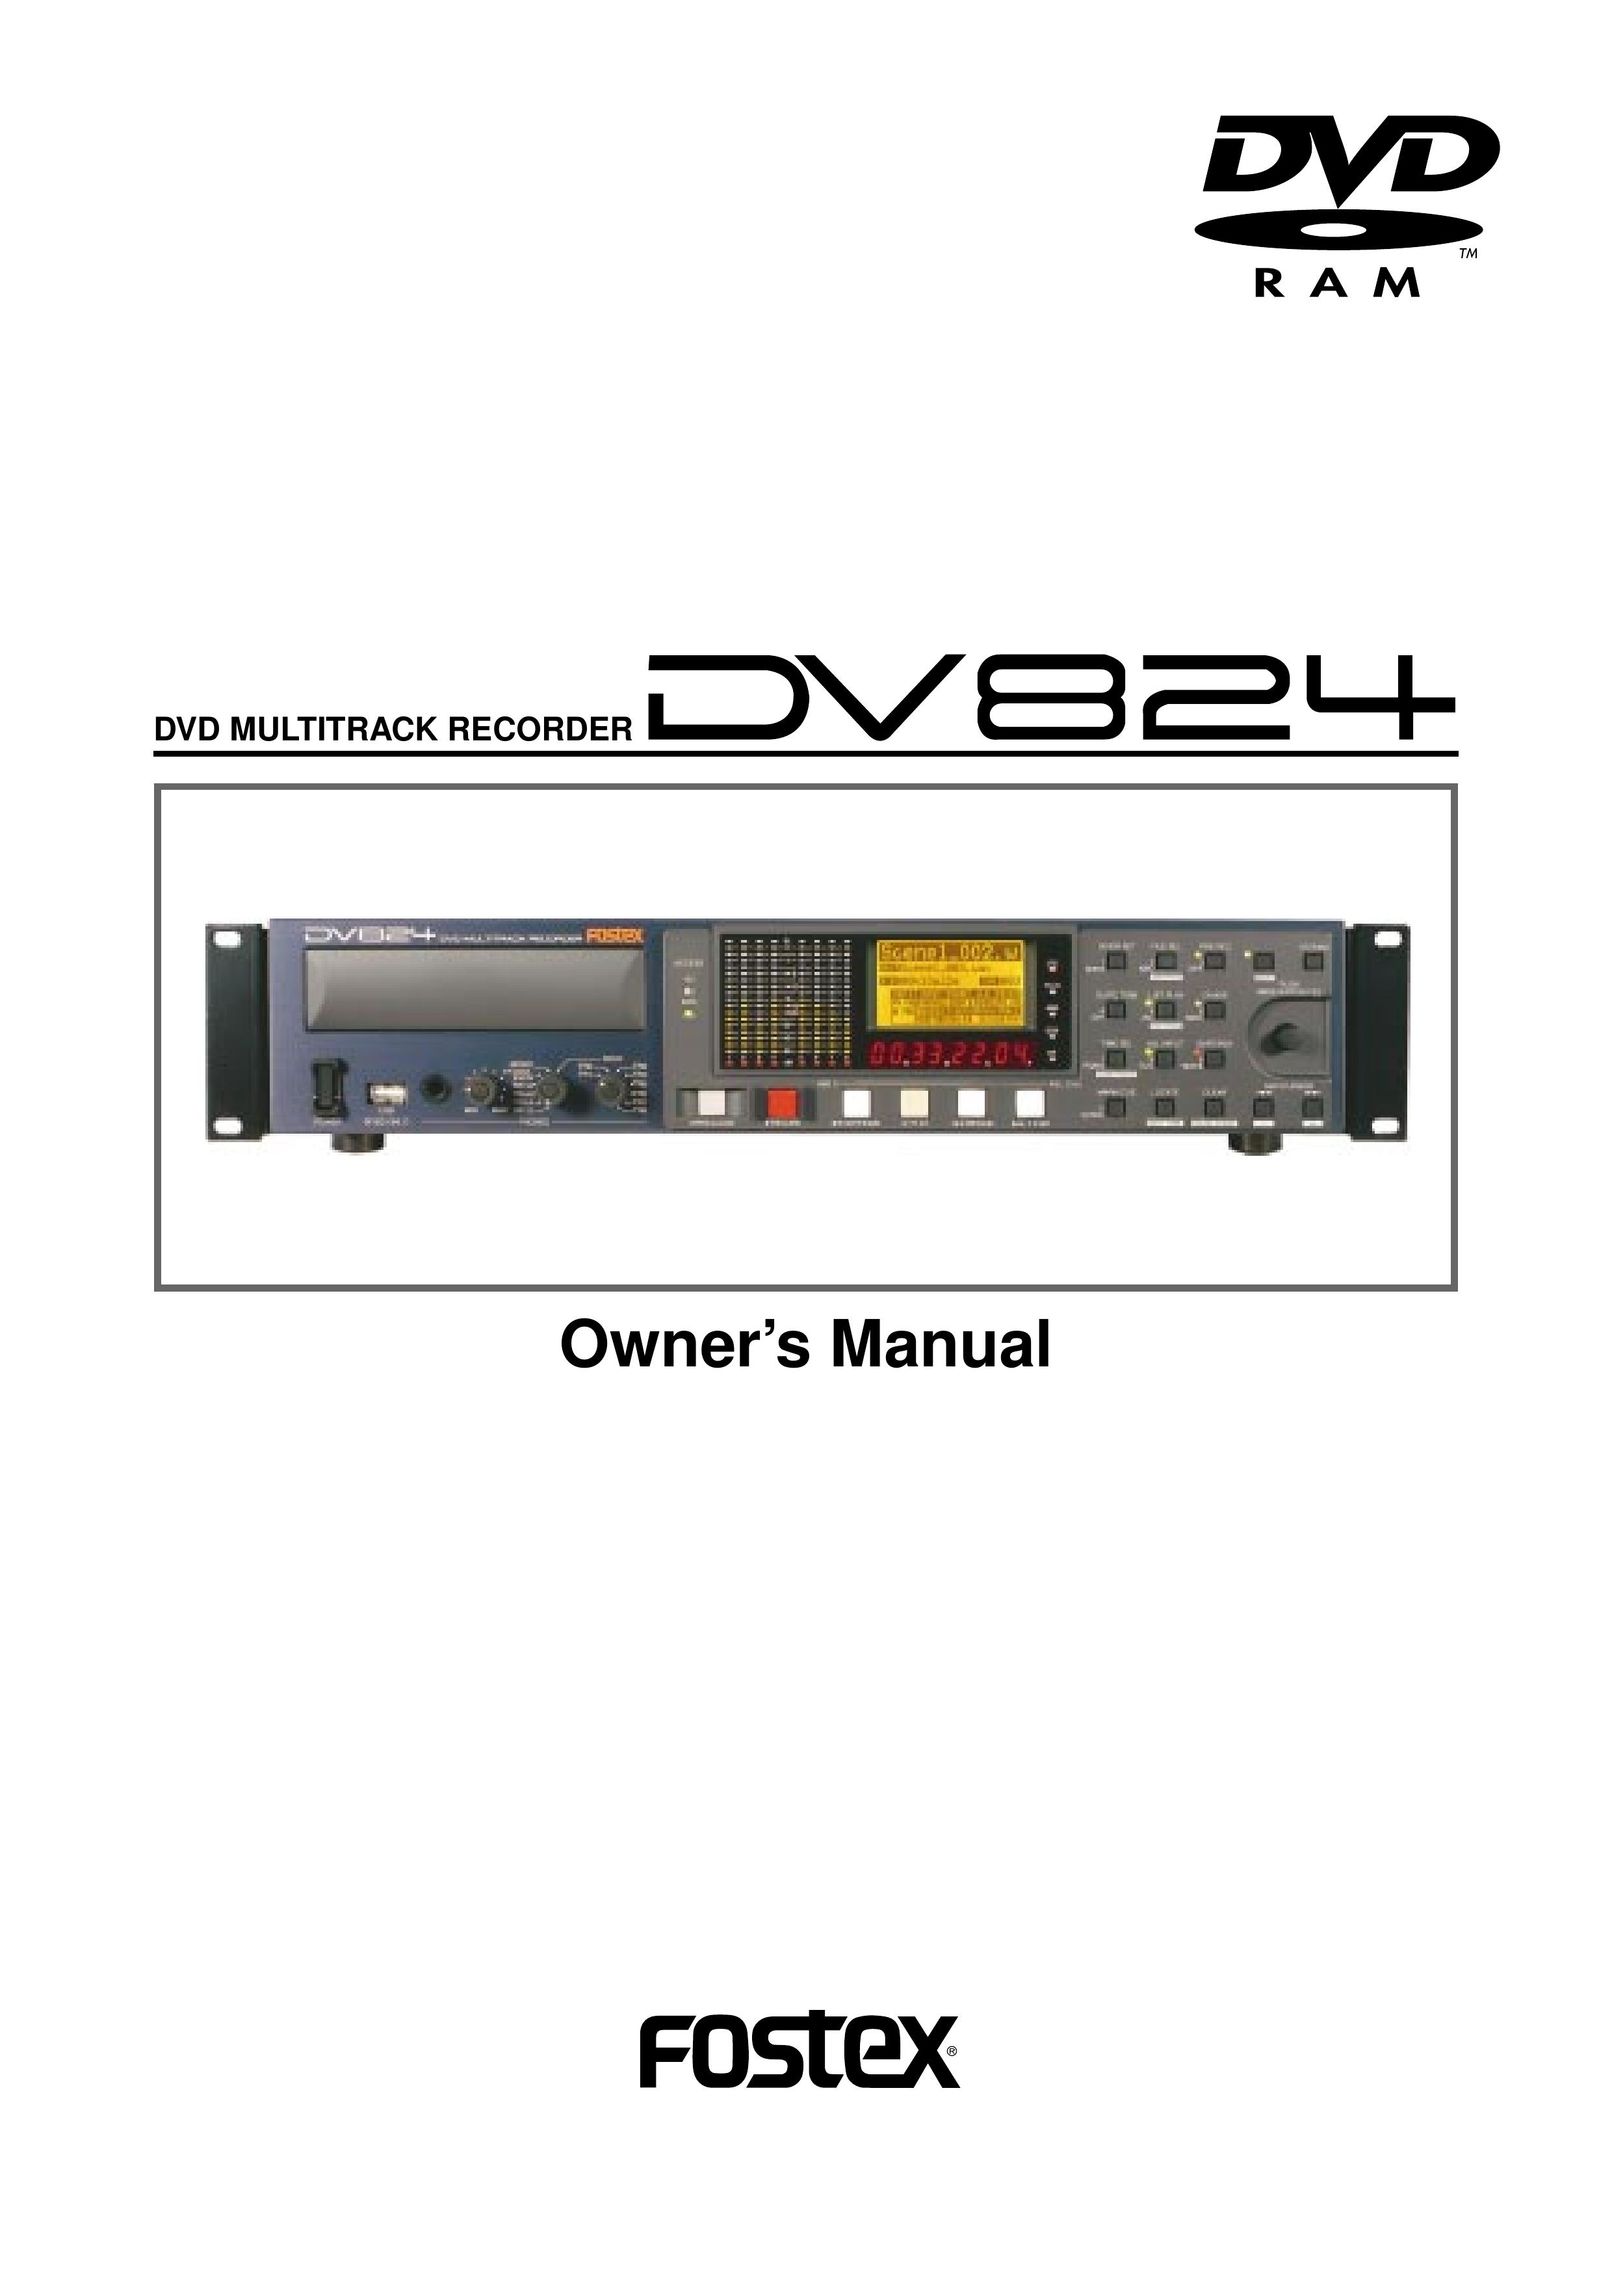 Fostex DV824 DVD Recorder User Manual